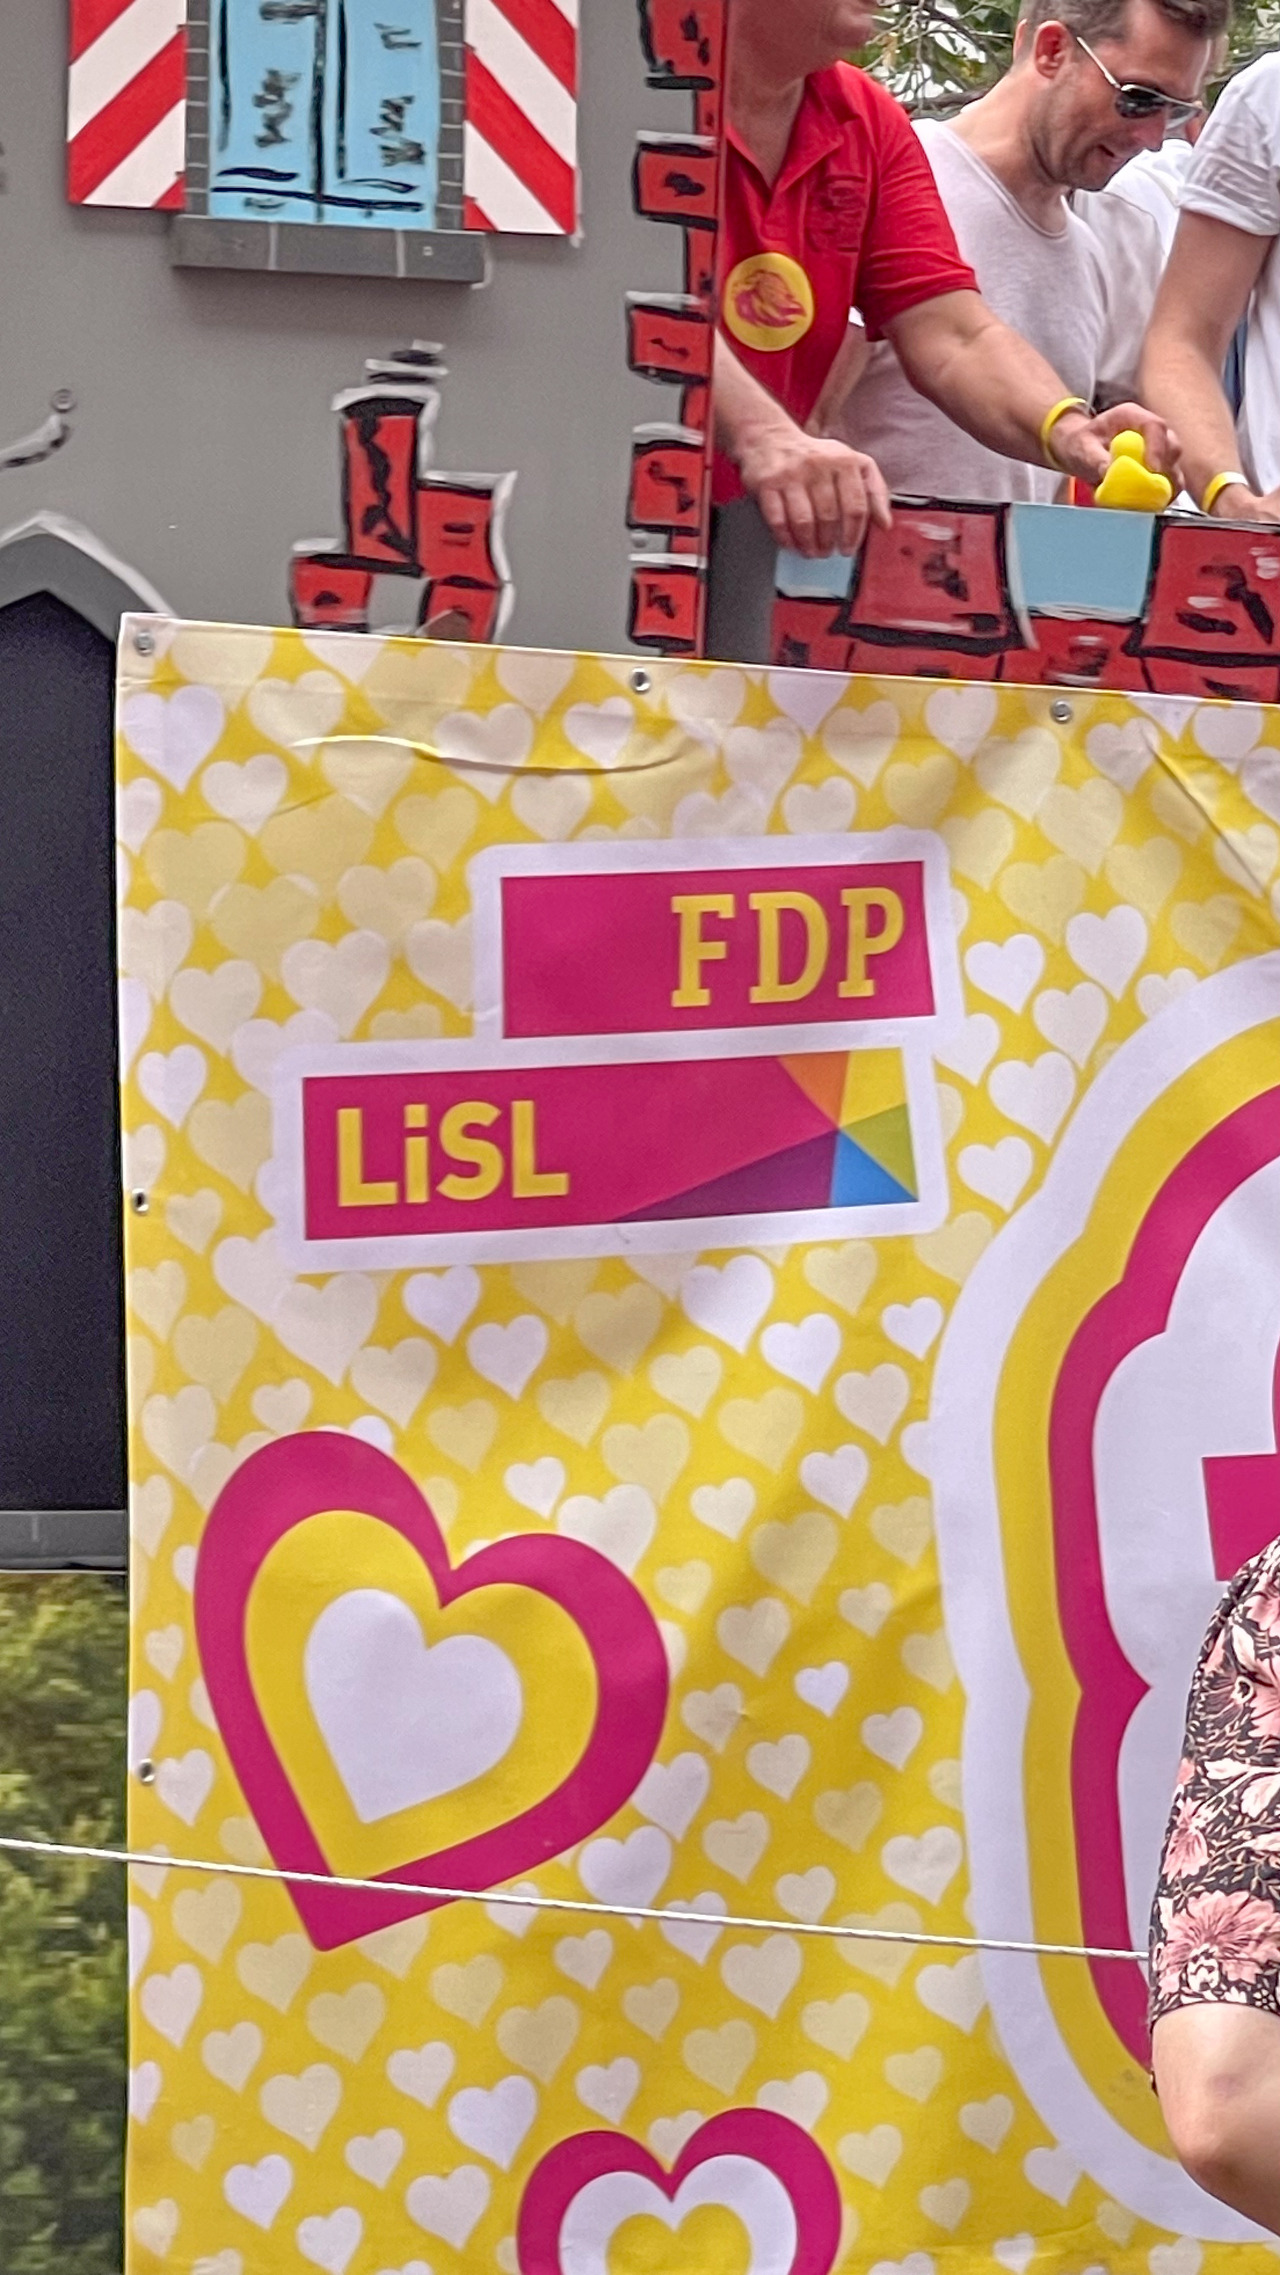 CDU와 FDP는 독일의 대표적인 보수정당이다. 이들의 집회참여가 위선적이라는 비판도 있다.